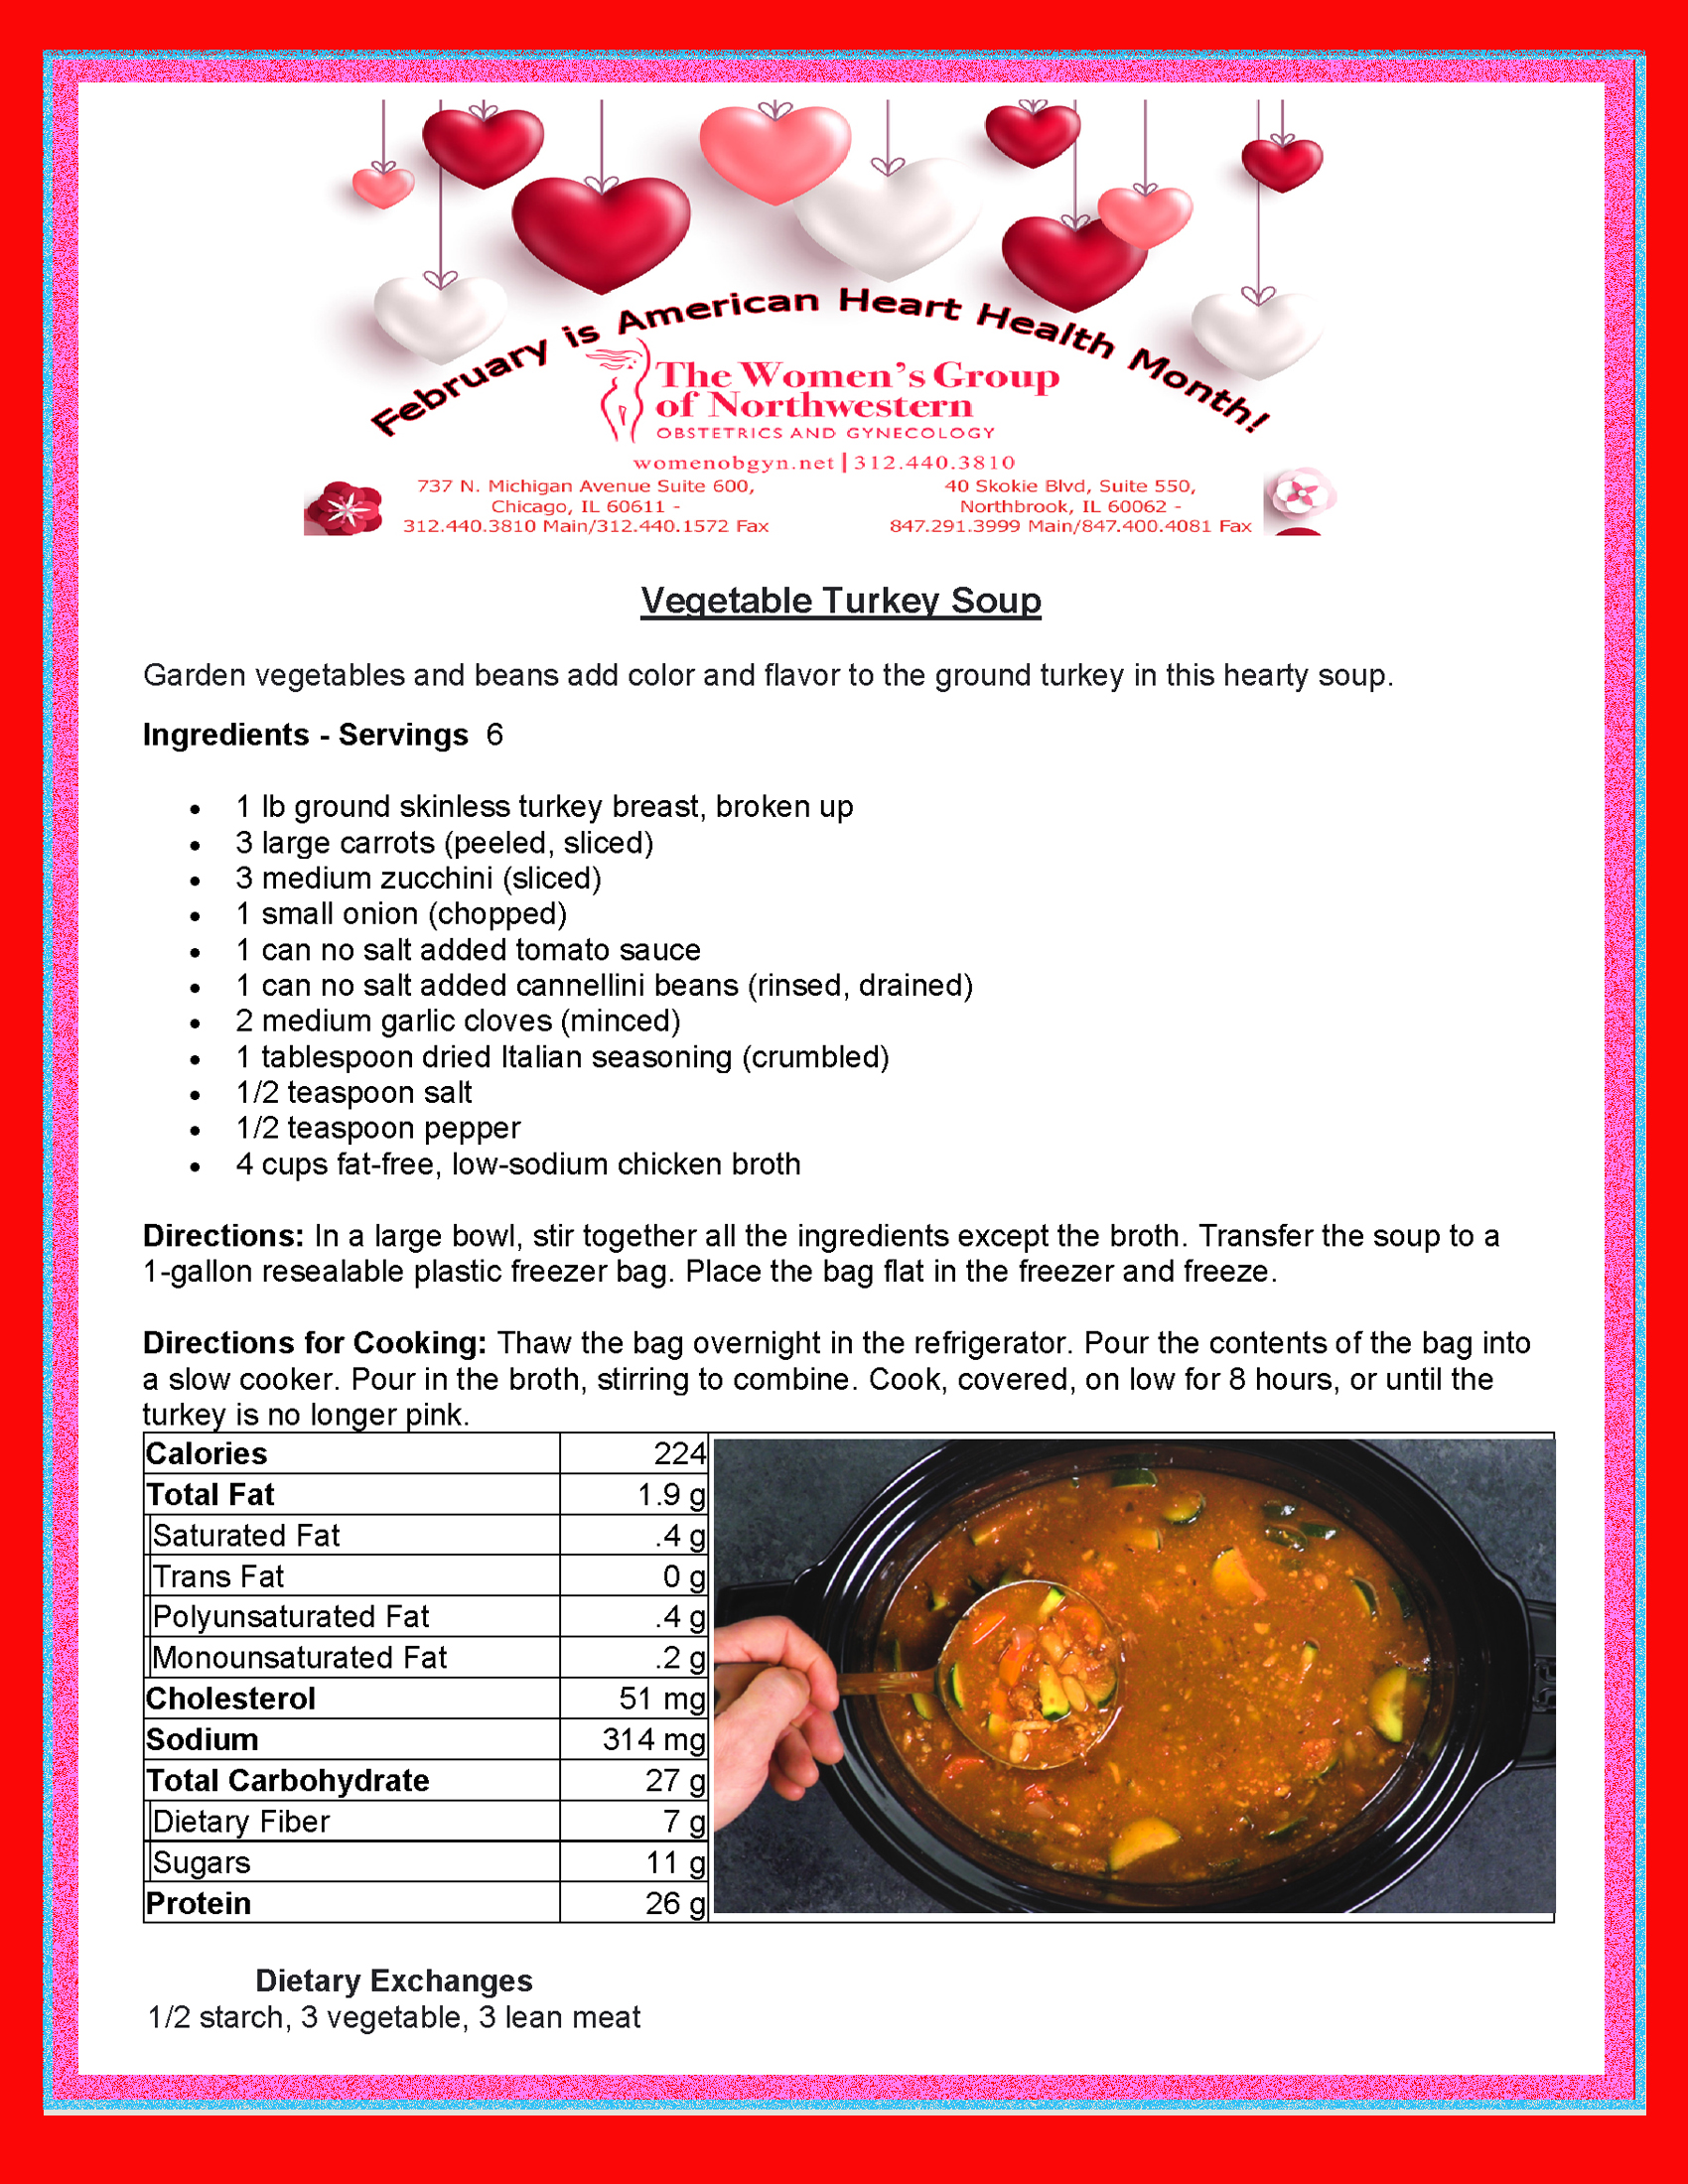 https://womenobgyn.net/wp-content/uploads/2021/02/Vegetable-Turkey-Soup_-American-Heart-Association-Recipes.jpg